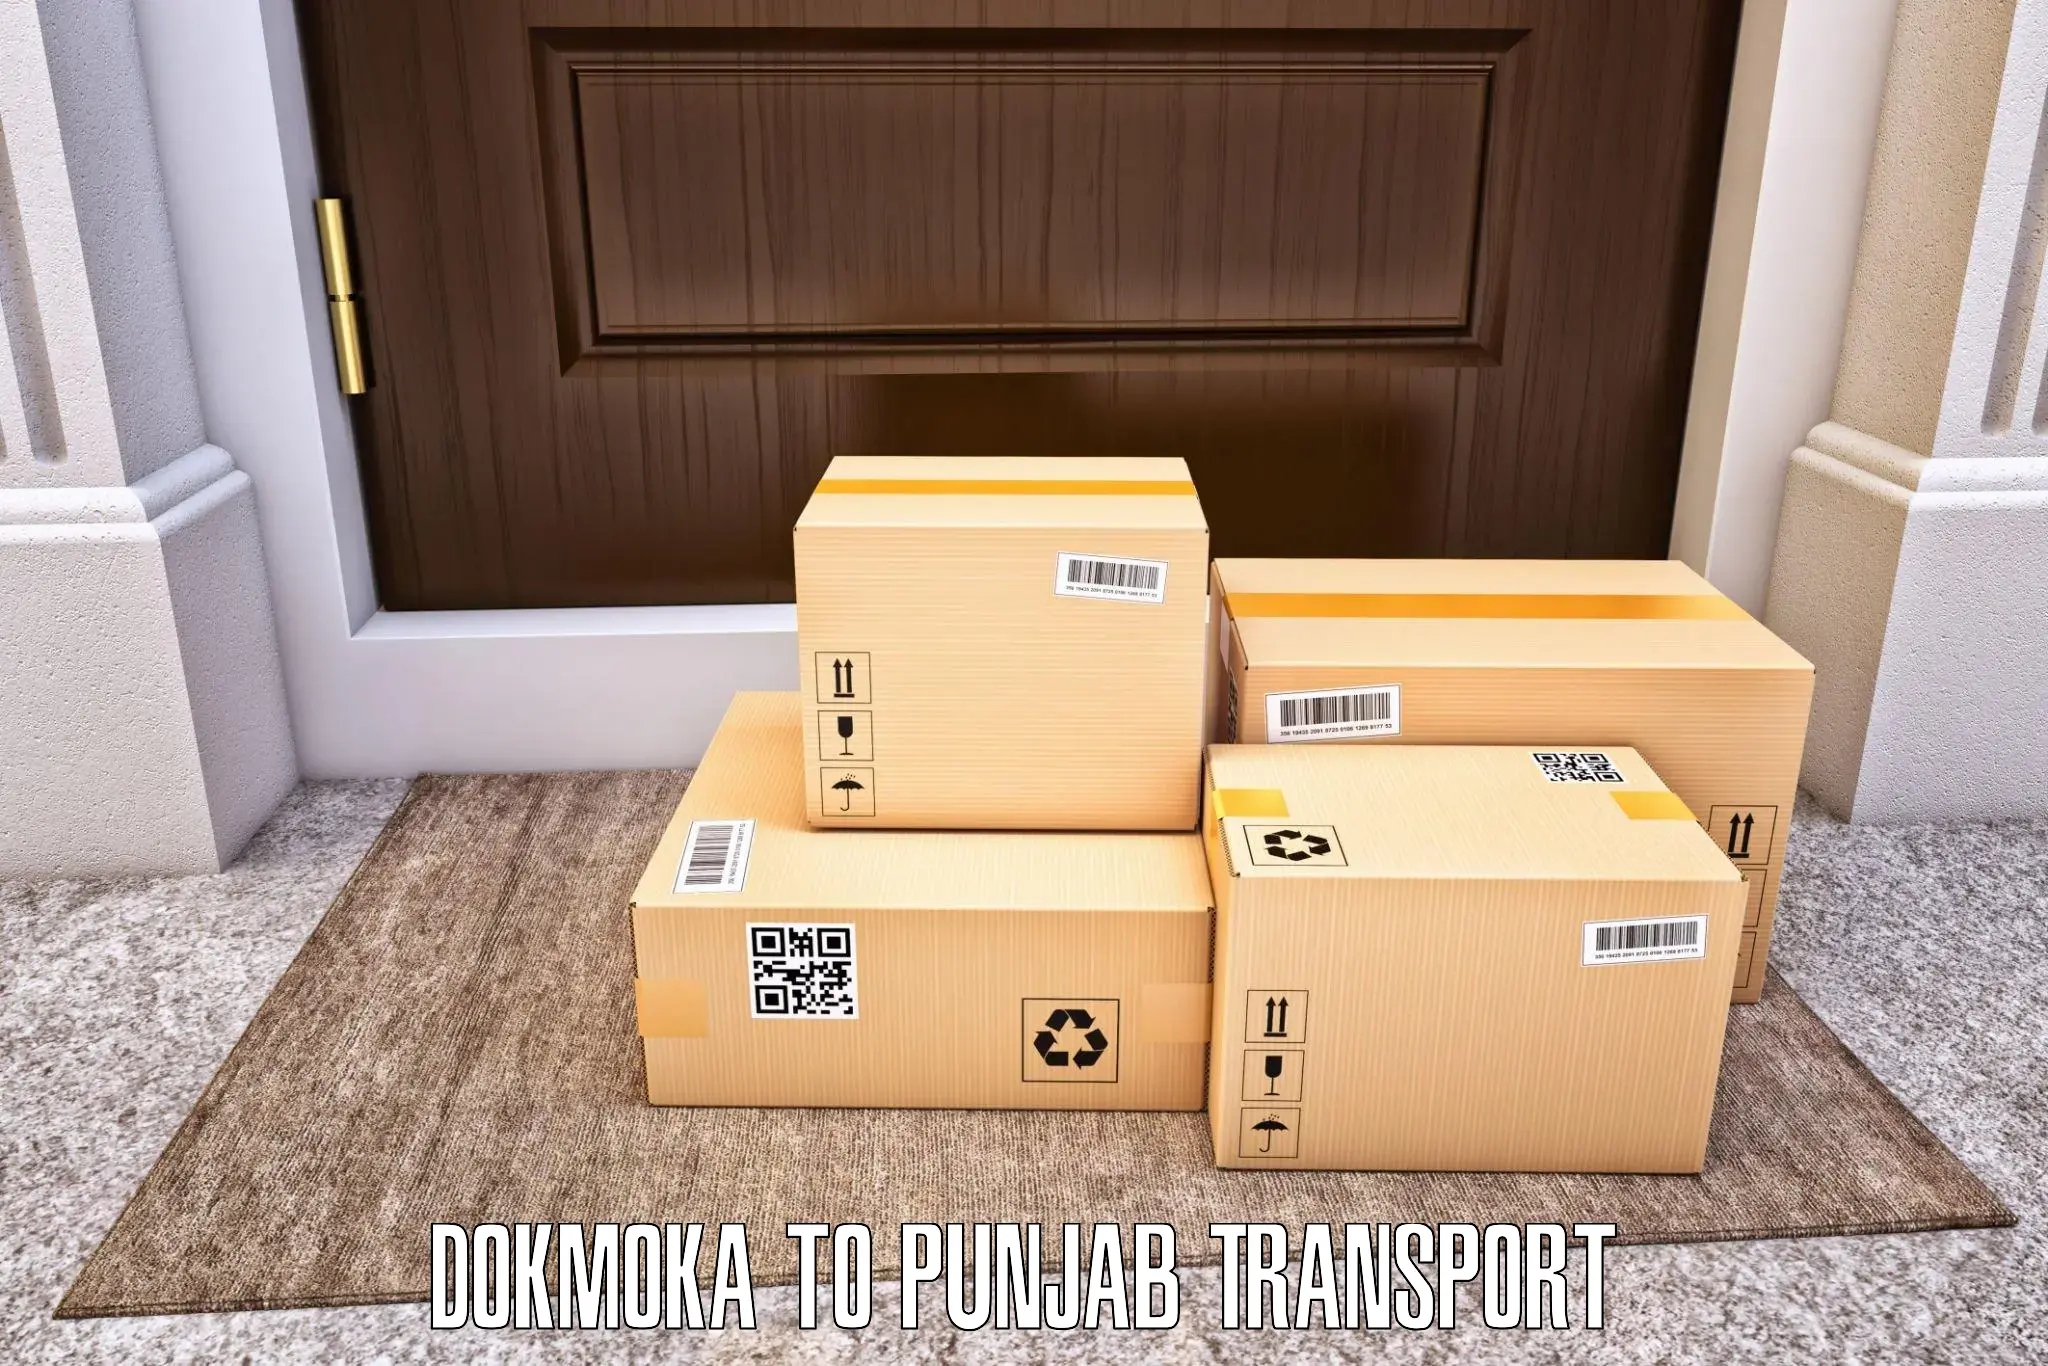 Delivery service Dokmoka to Zira